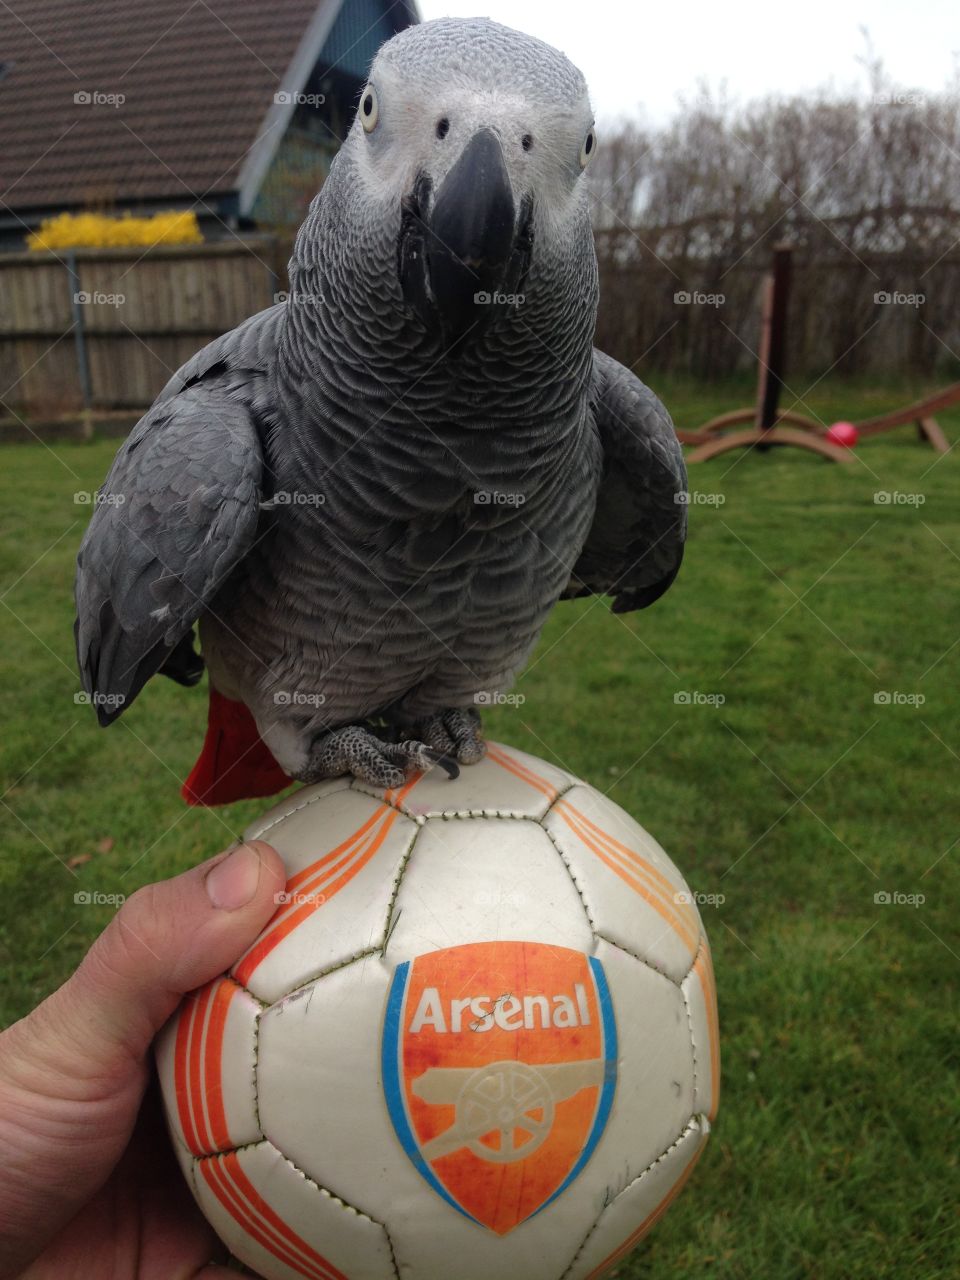 Arsenal. Parrot